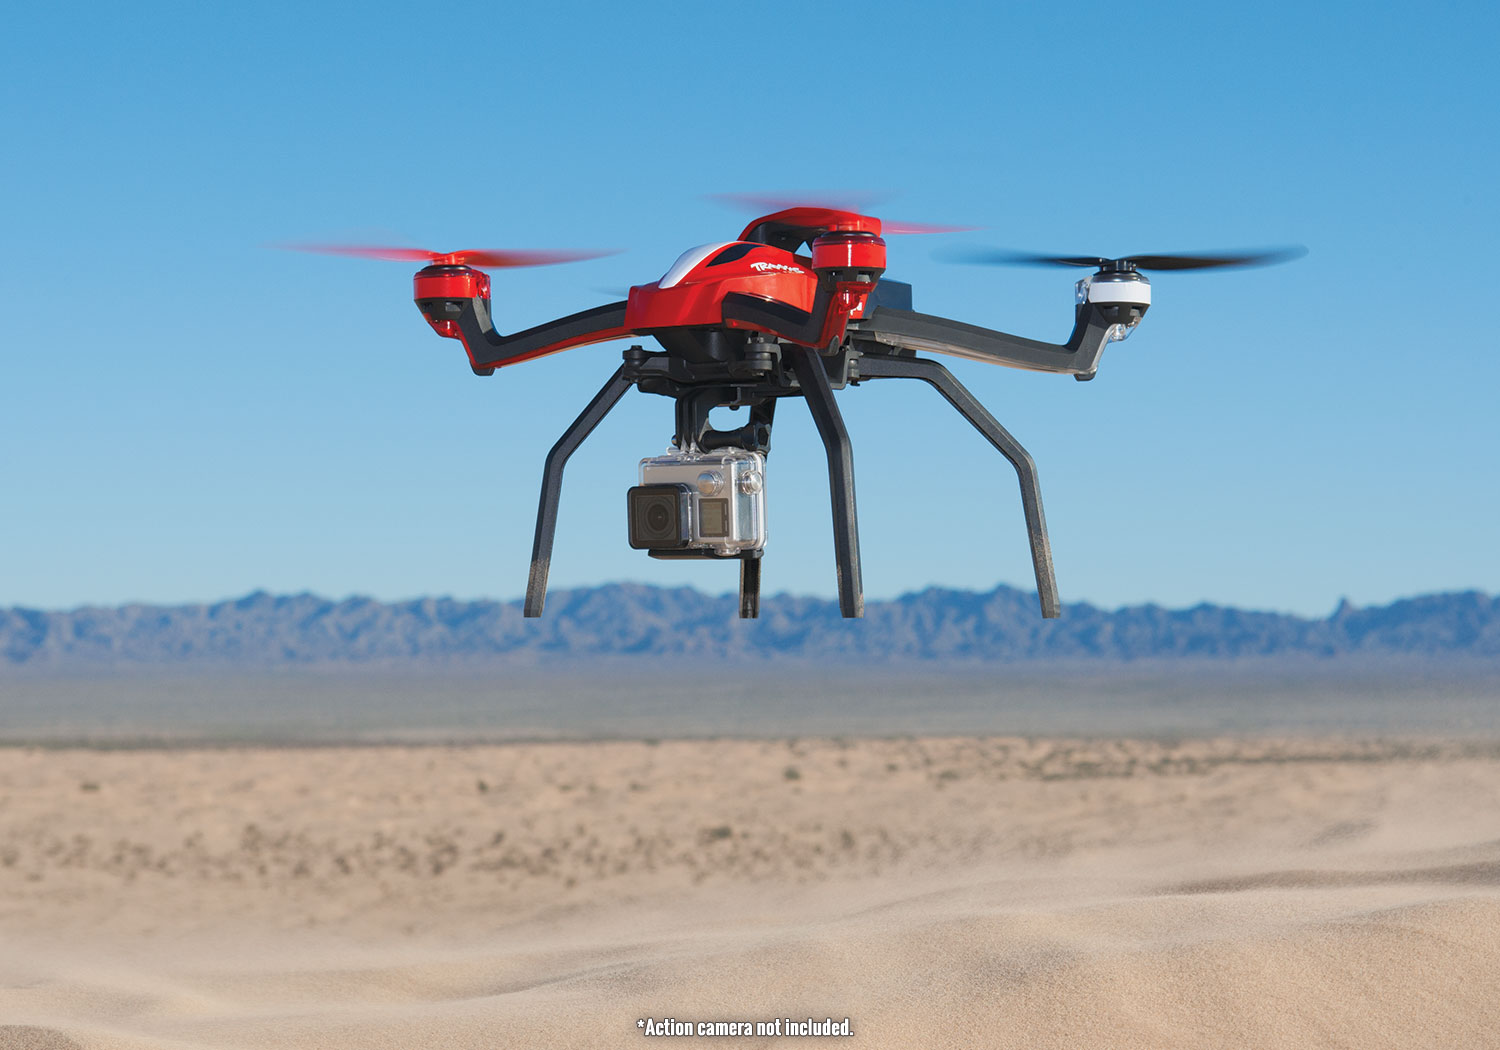   TRAXXAS	Aton GPS Quadcopter (3000mAh LiPo, Fixed Camera Mount)